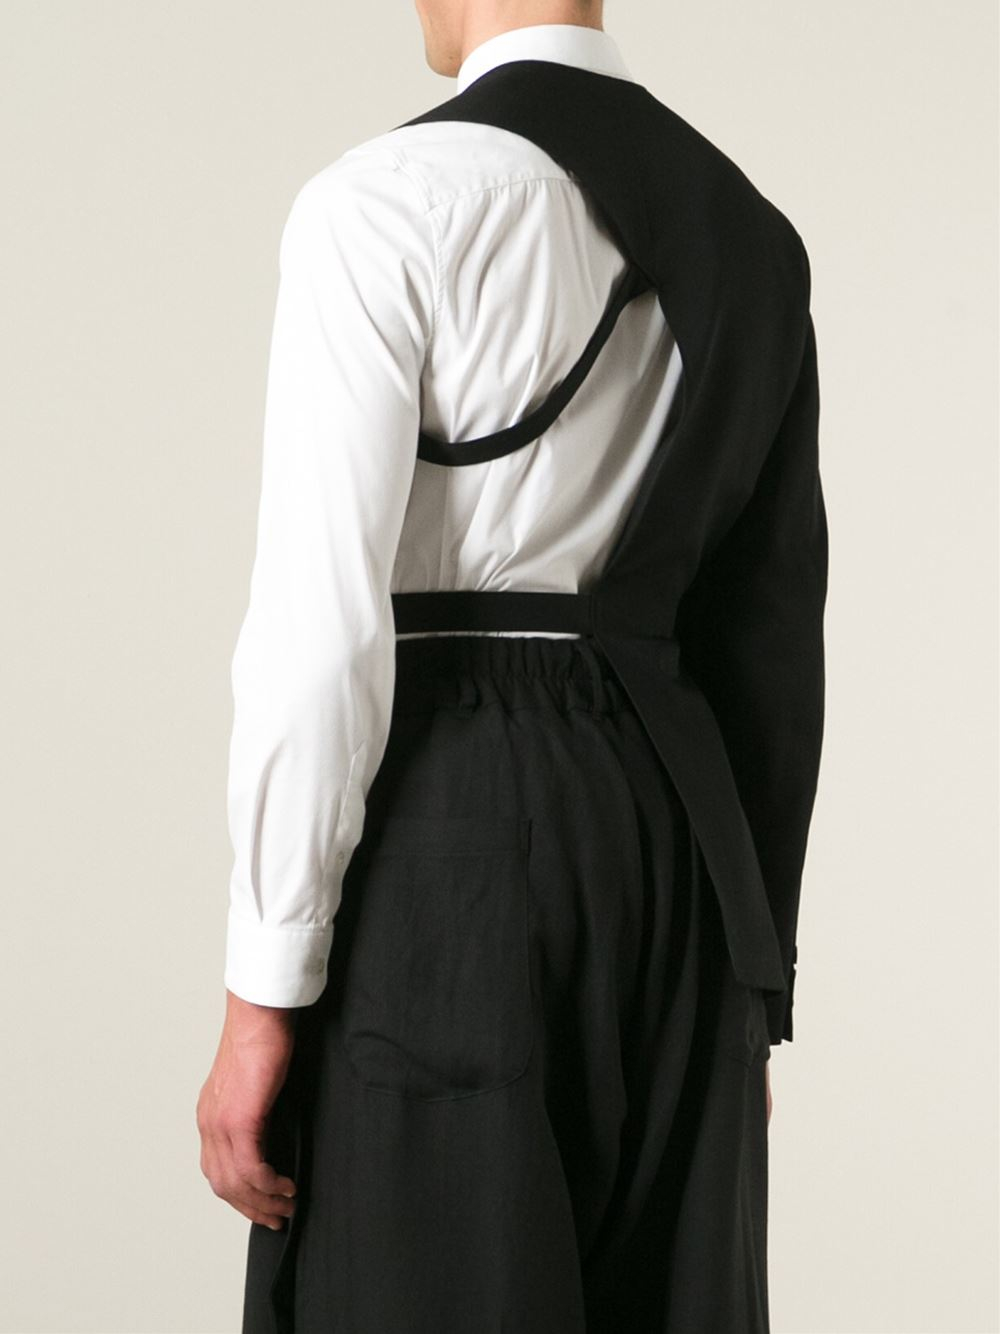 Yohji Yamamoto Asymmetric Harness Blazer in Black for Men - Lyst